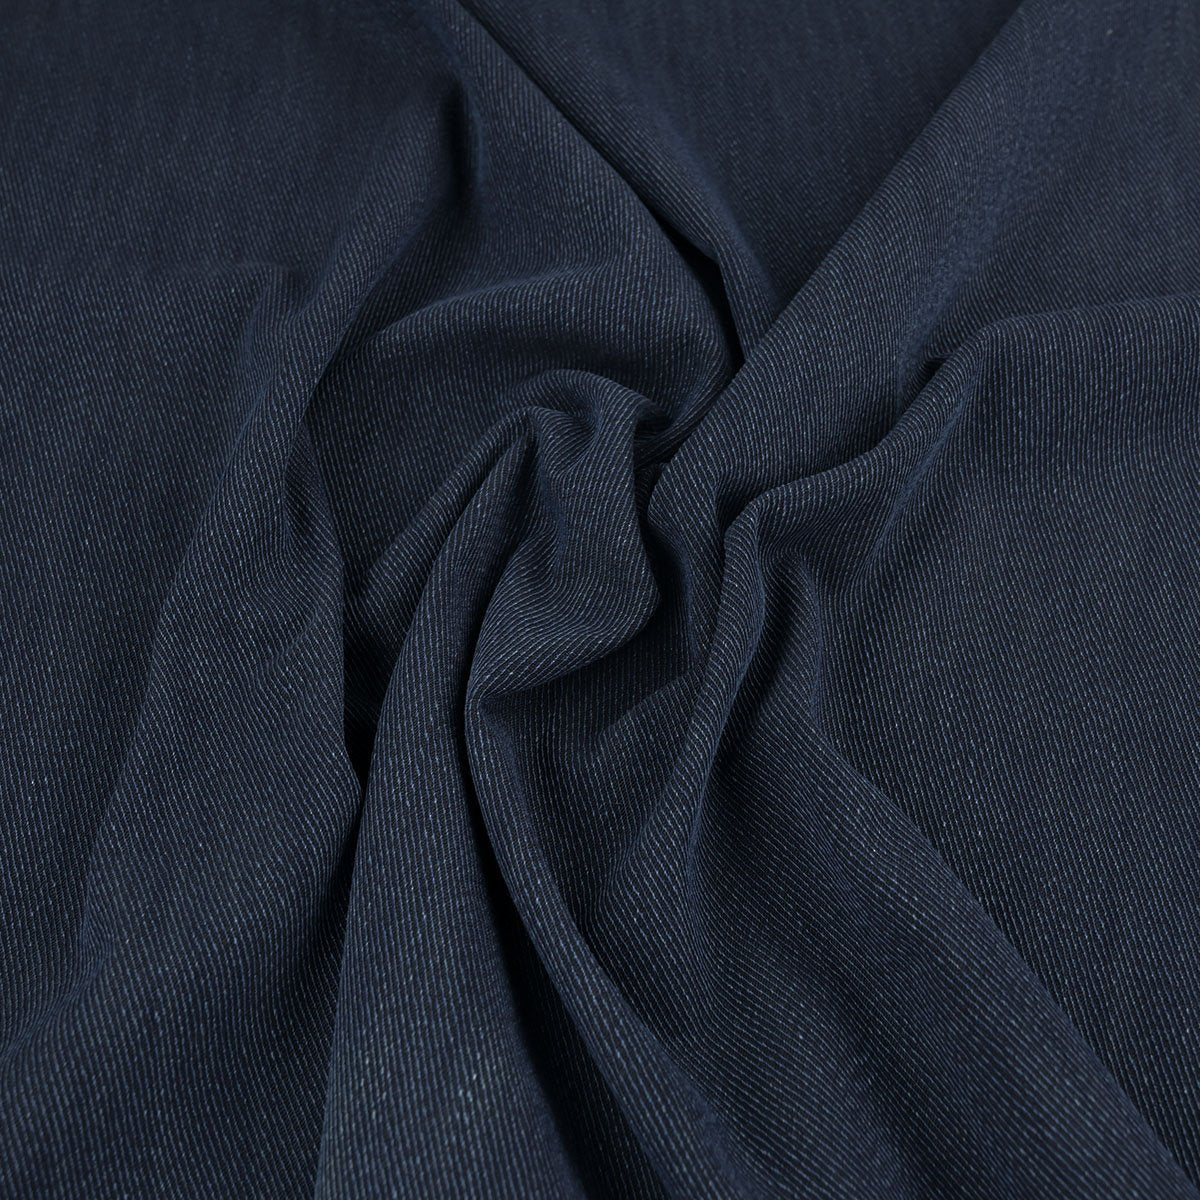 Indigo Blue Heavy Cotton Fabric 709